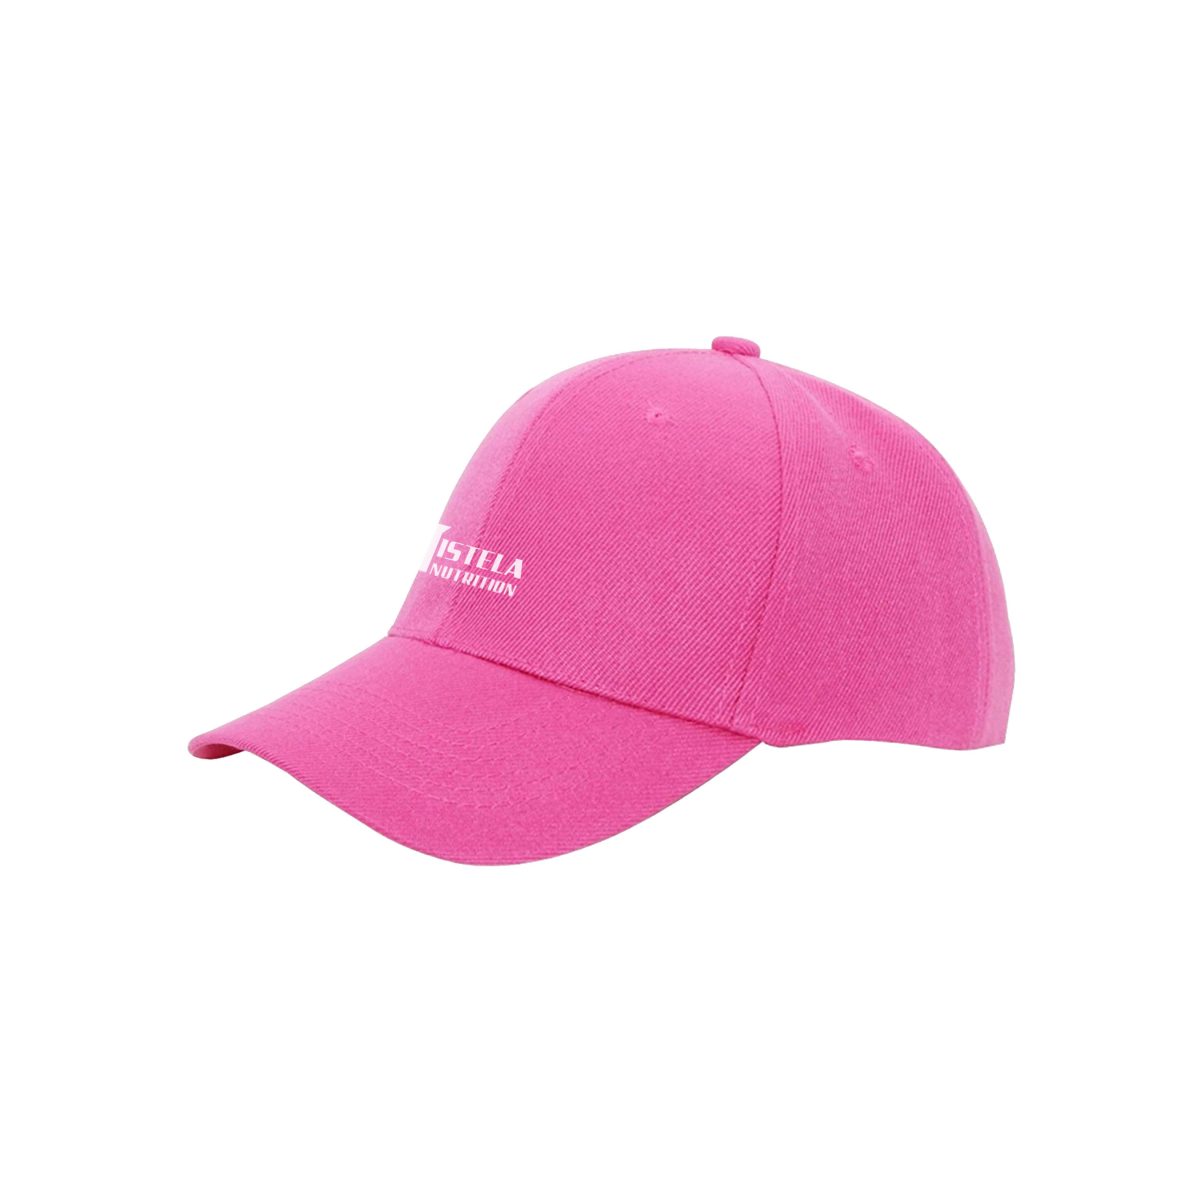 pink sun hat